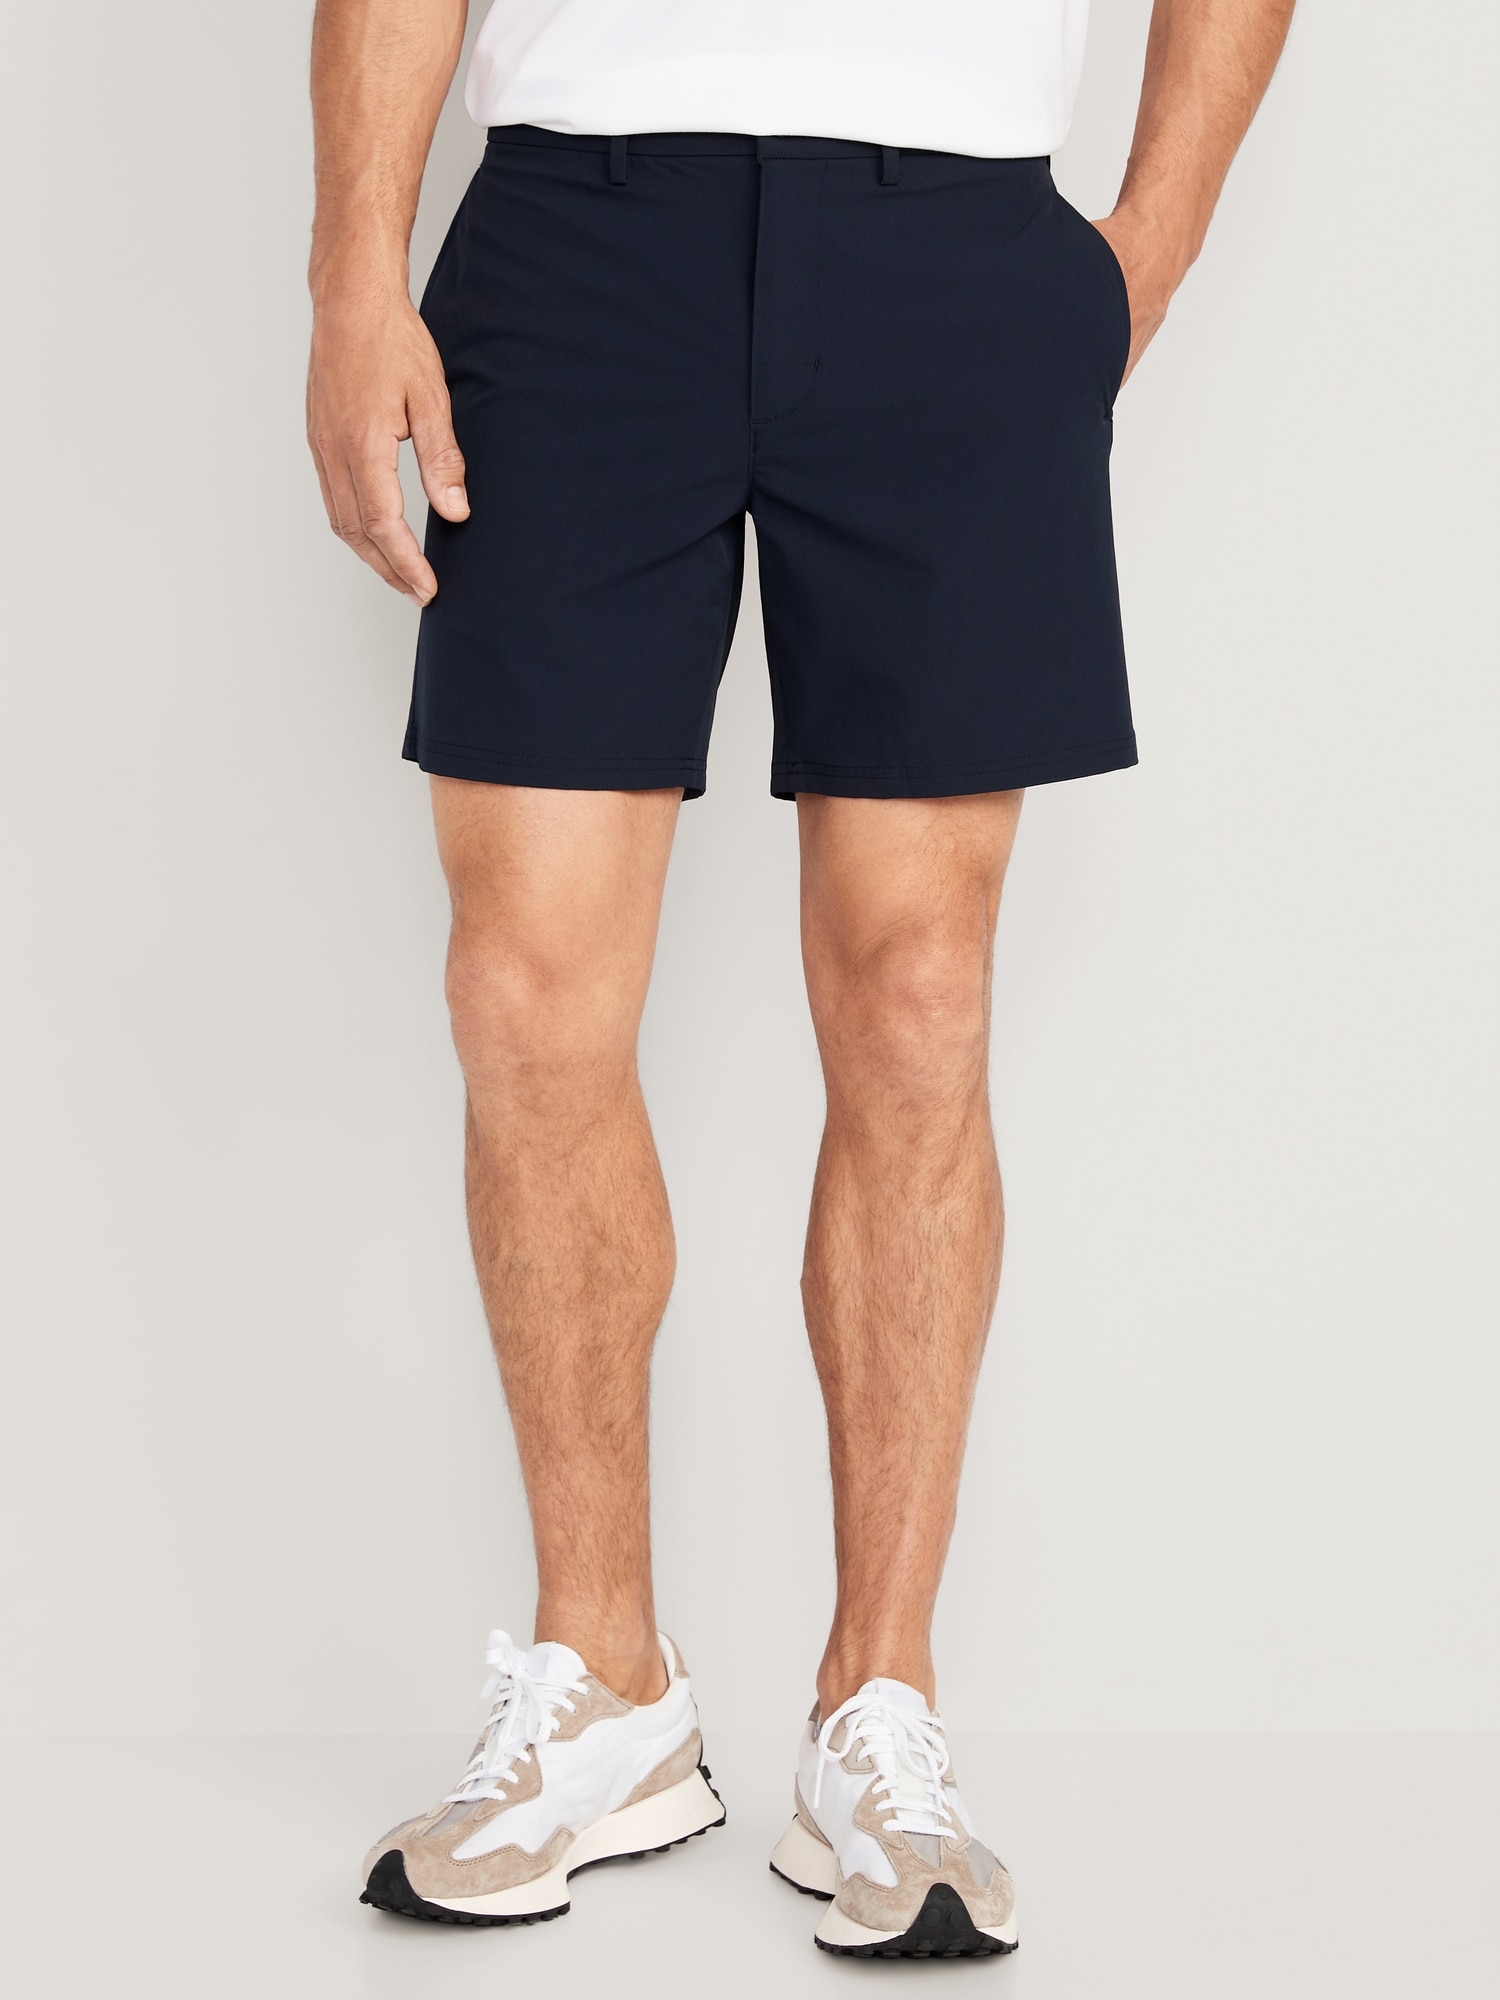 Old Navy StretchTech Nylon Chino Shorts for Men -- 7-inch inseam blue. 1